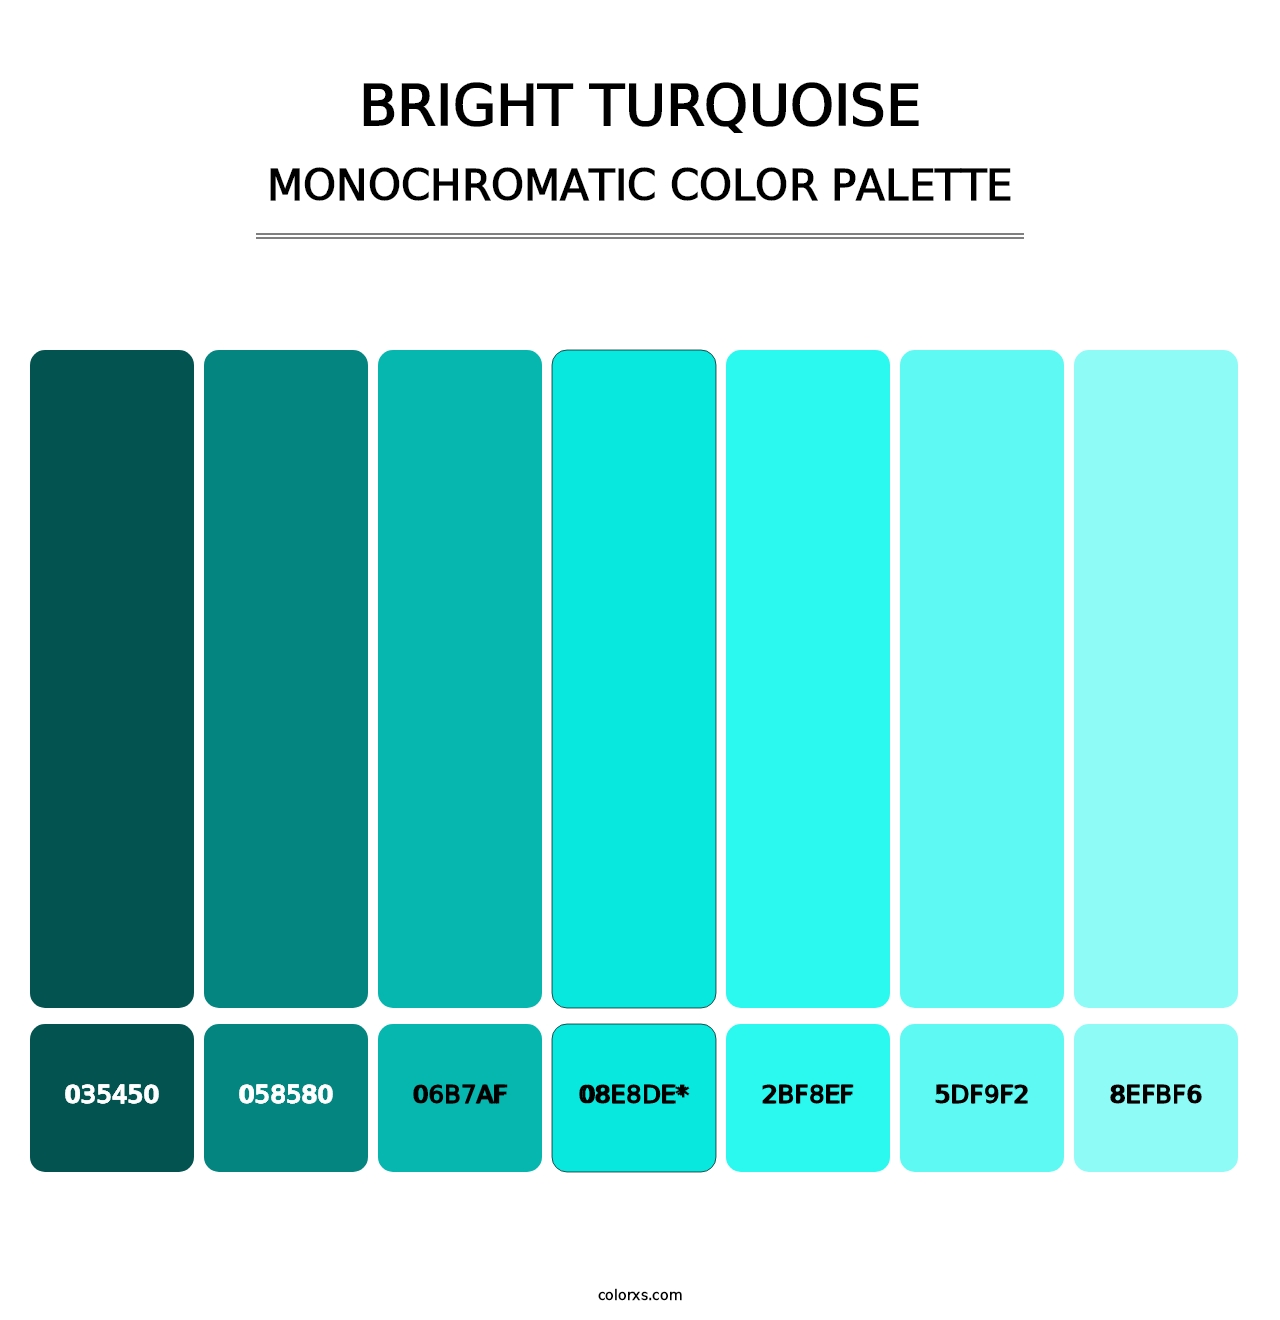 Bright Turquoise - Monochromatic Color Palette